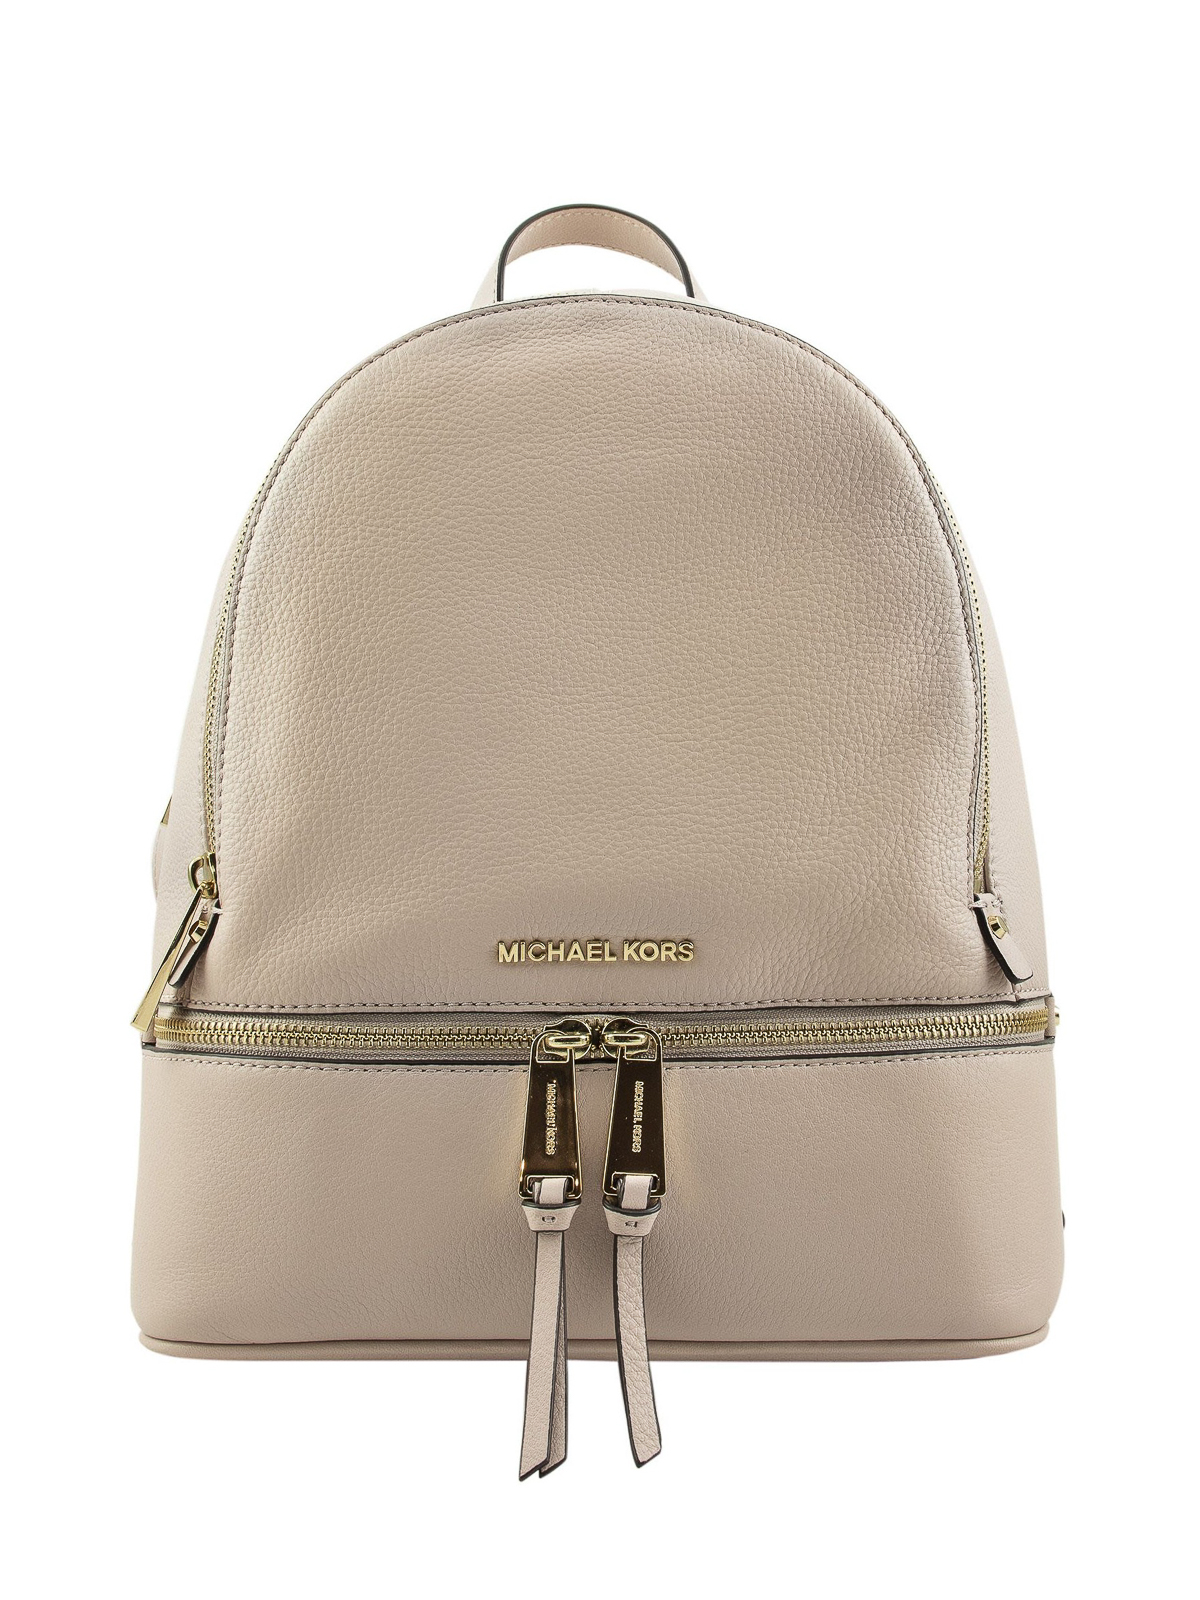 Backpacks Michael Kors - Rhea M light beige leather backpack - 30S5GEZB1L187